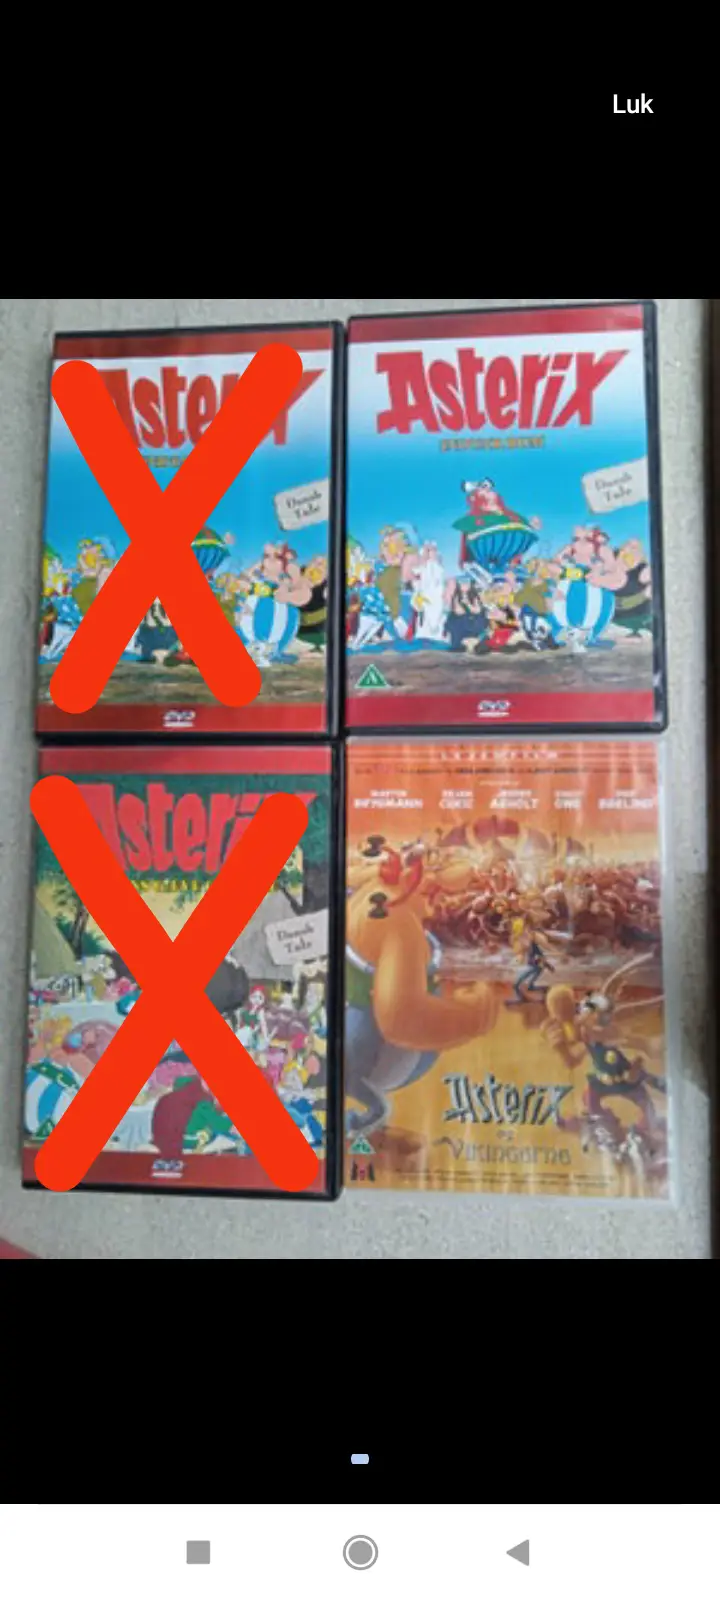 Asterix Dvd